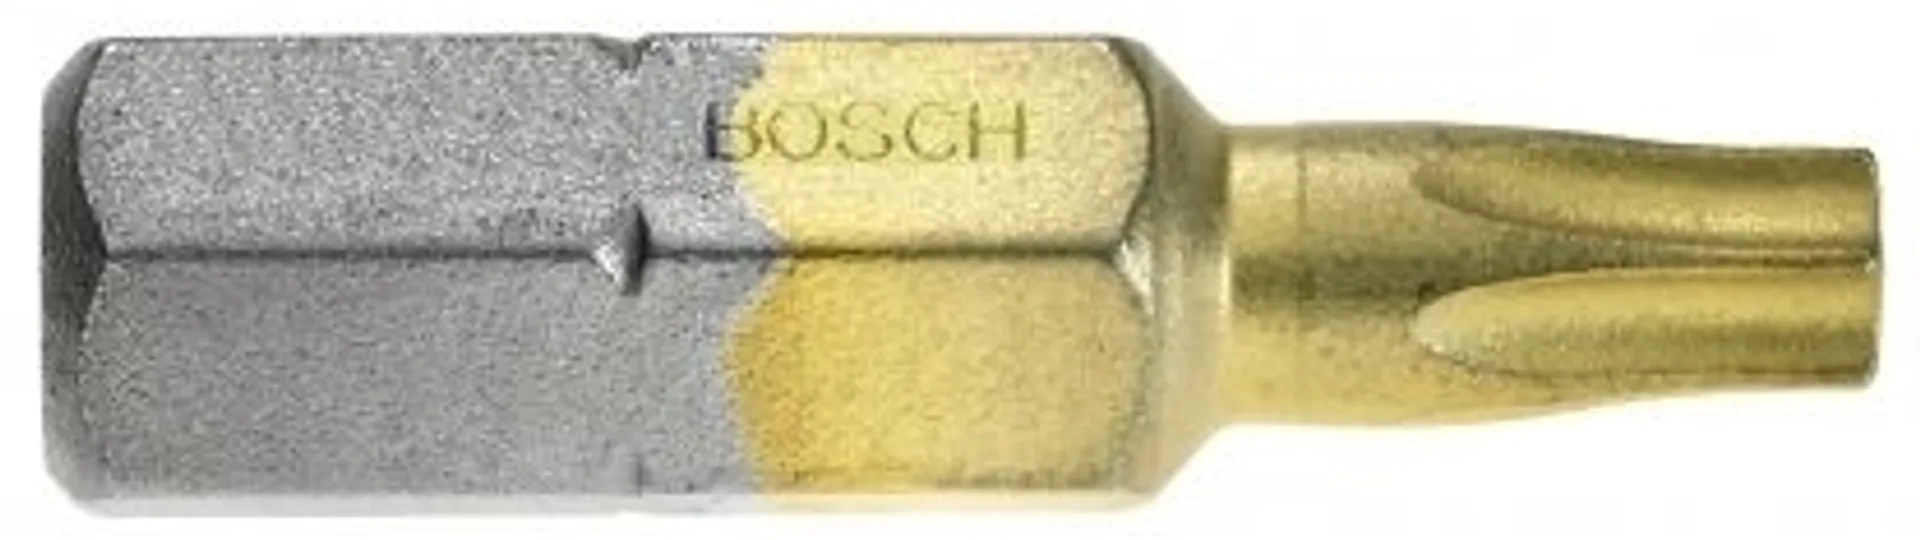 Bosch ruuvauskärki TORX 25 Maxgrip 25 mm 3 kpl